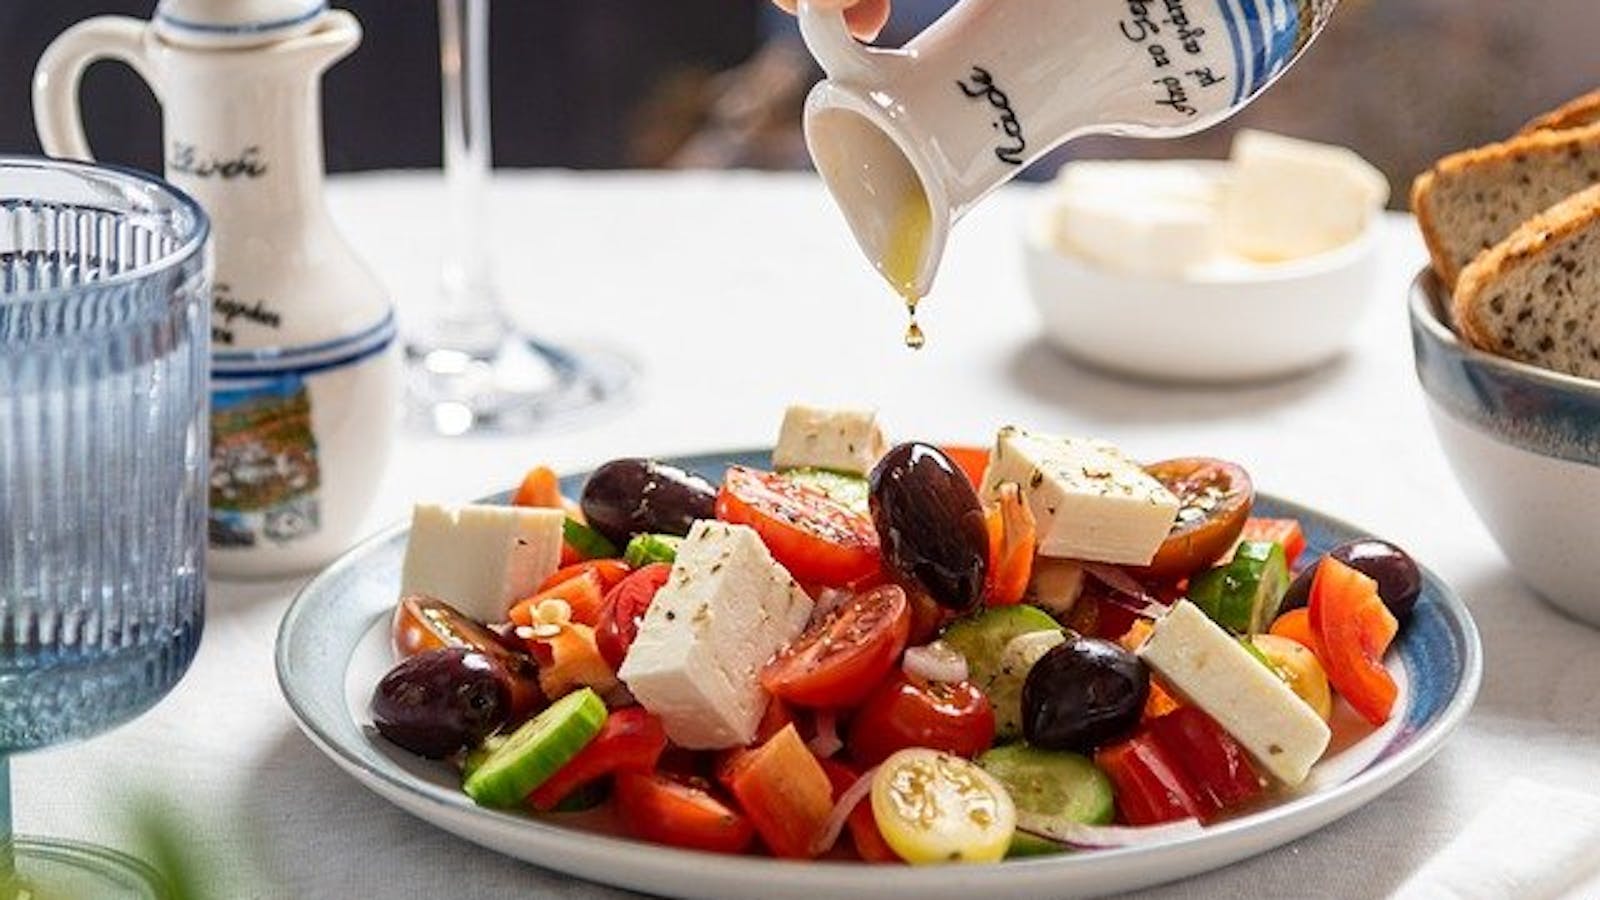 Greek cuisine as an integral part of the Mediterranean diet